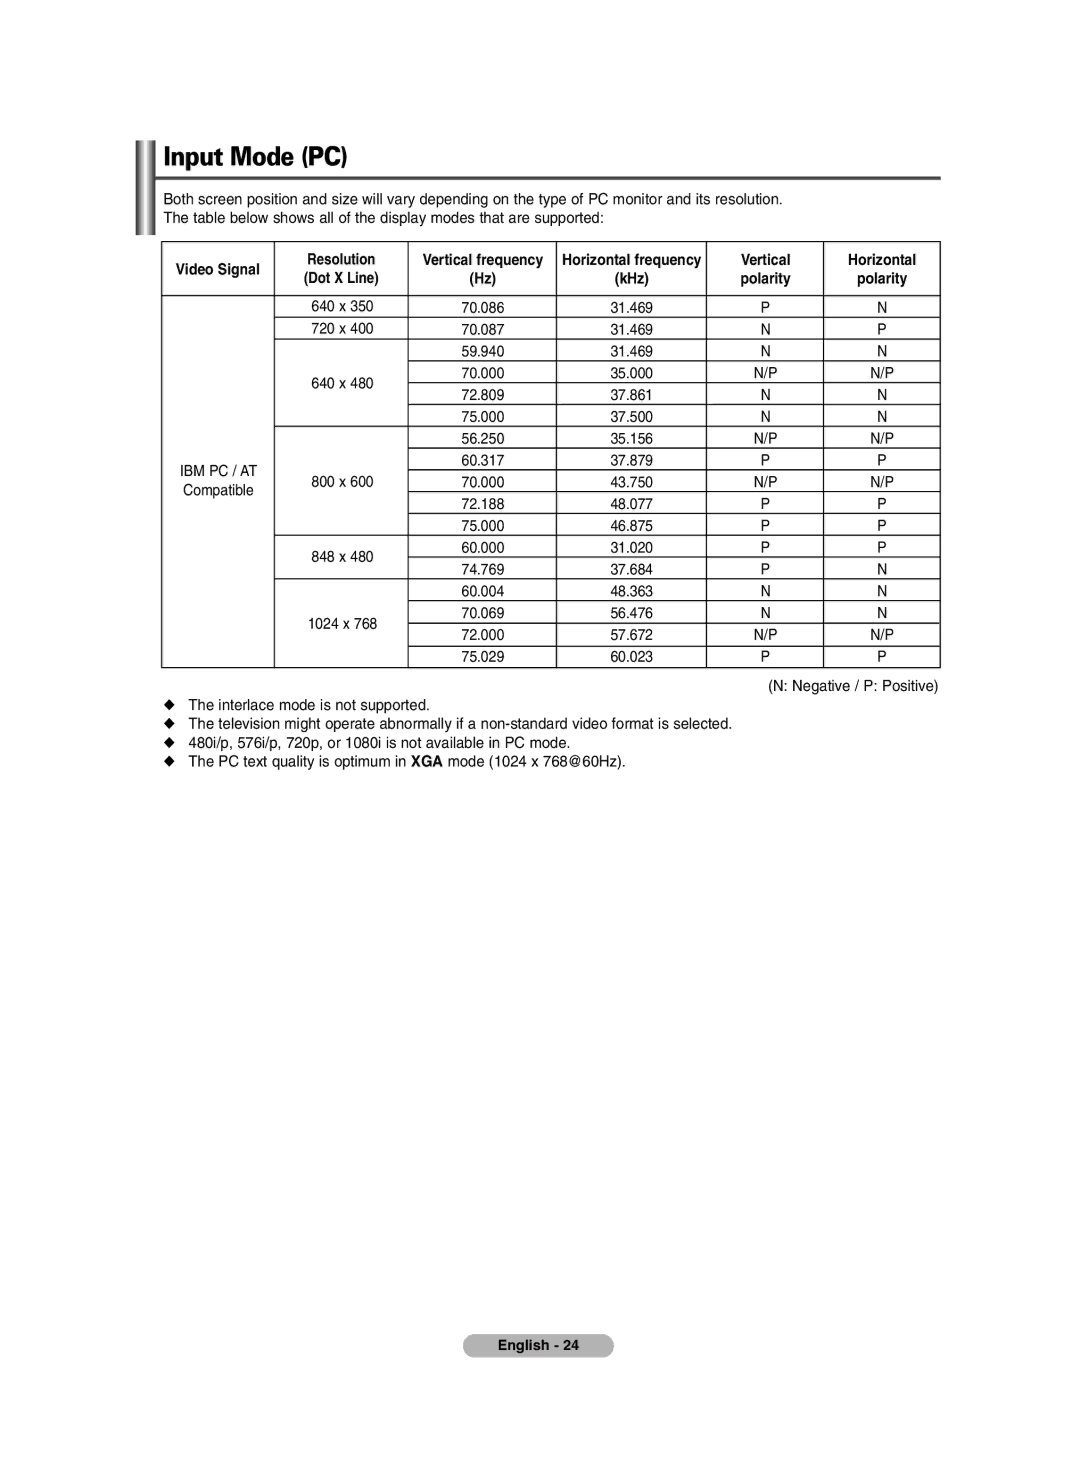 Samsung PS-42E7S, PS-42E7H manual Input Mode PC, Video Signal Resolution, Vertical Horizontal 